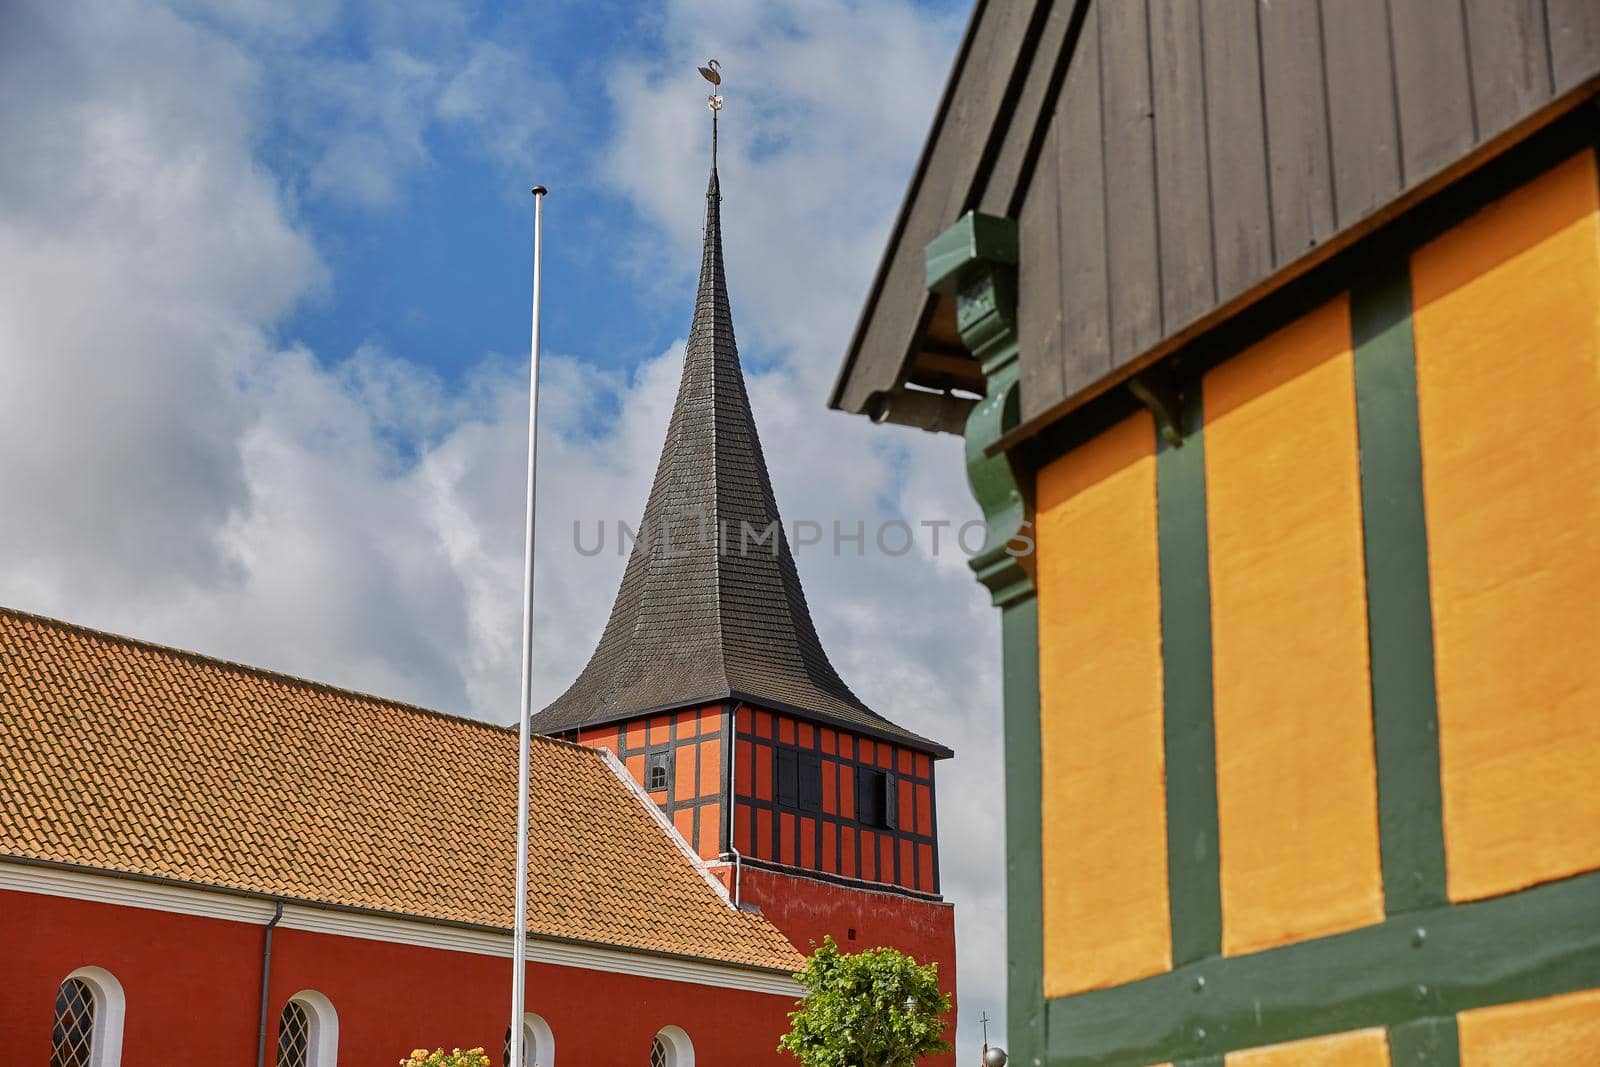 View of Svaneke Church on Island of Bornholm in Denmark by wondry